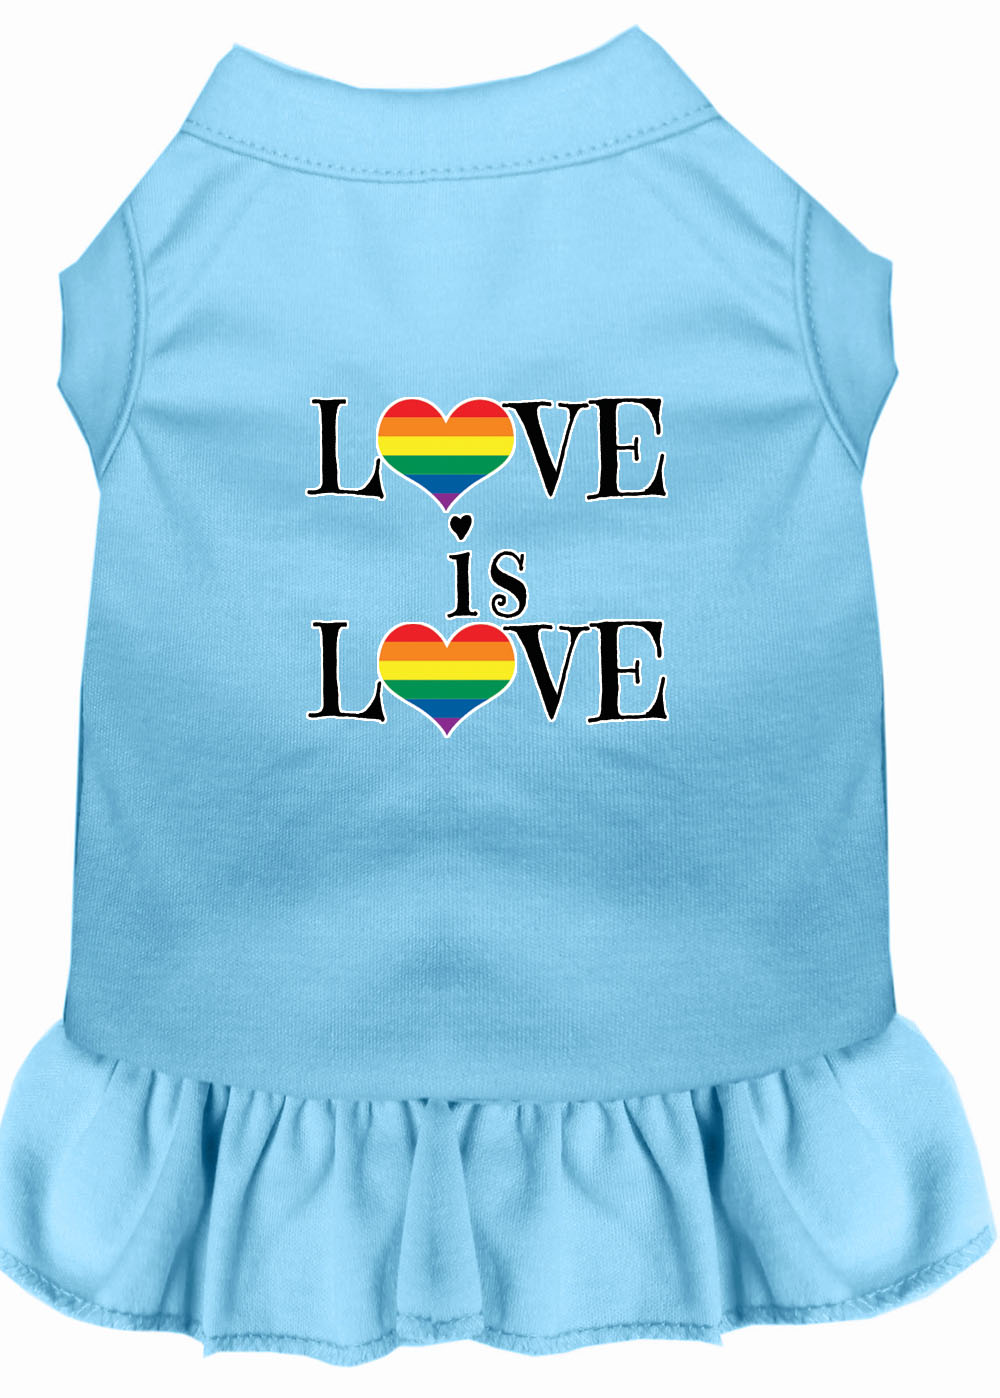 Love is Love Screen Print Dog Dress Baby Blue Lg